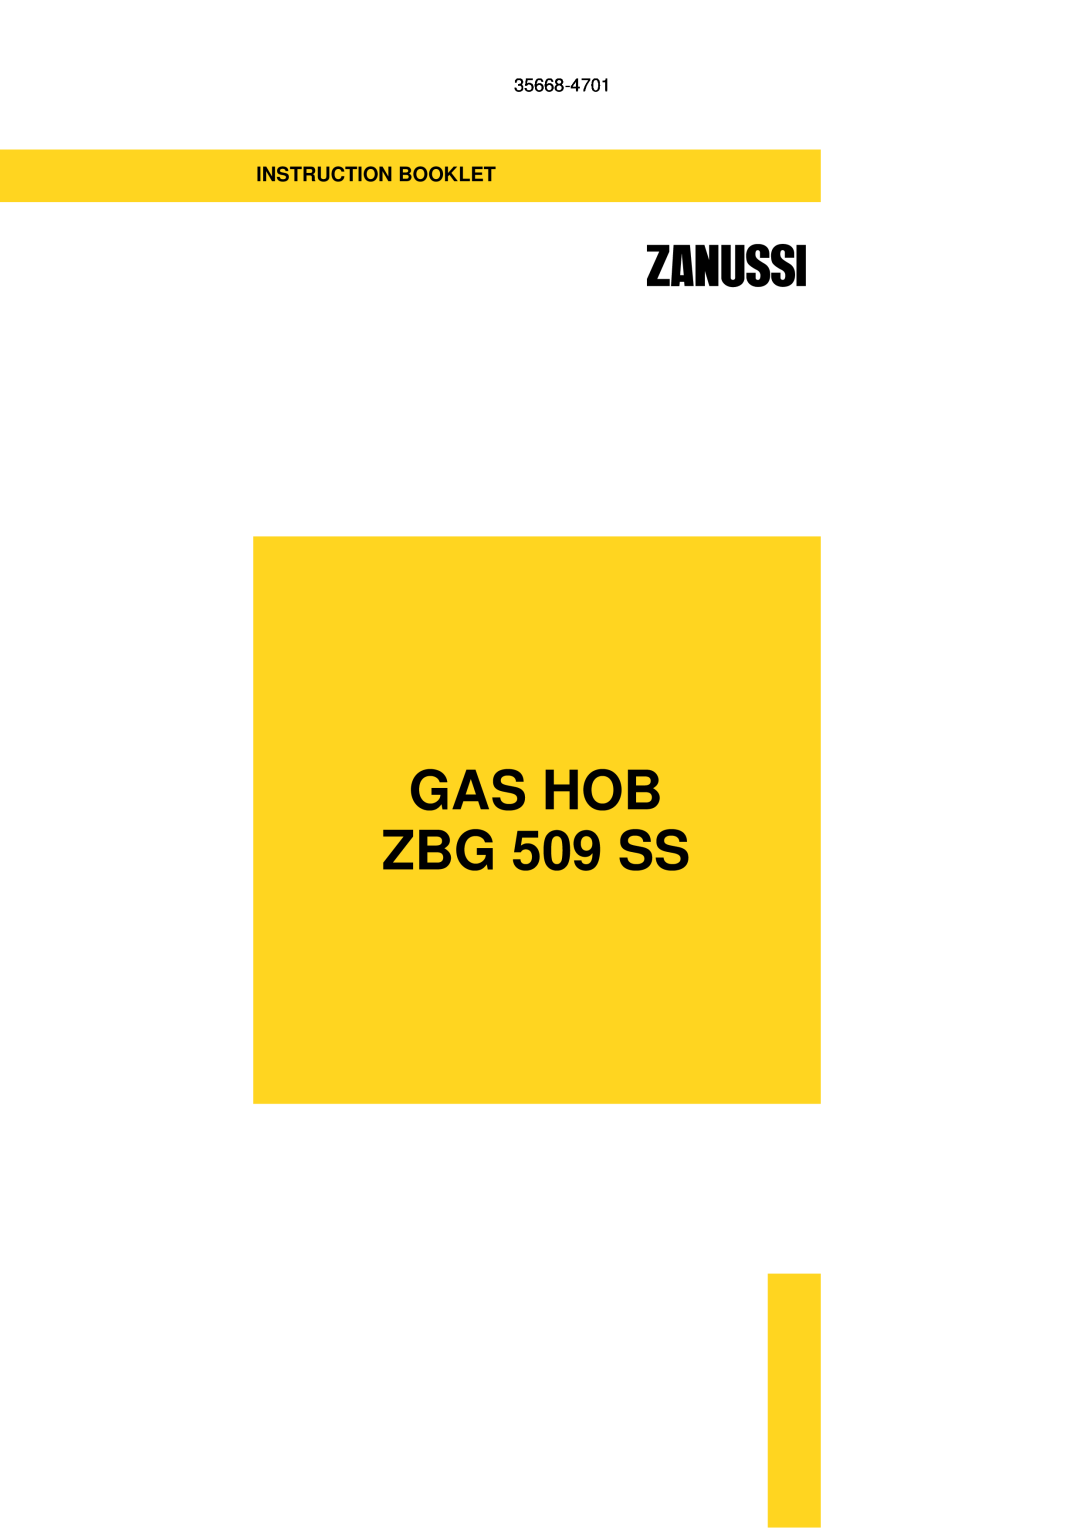 Zanussi manual GAS HOB ZBG 509 SS, Instruction Booklet 